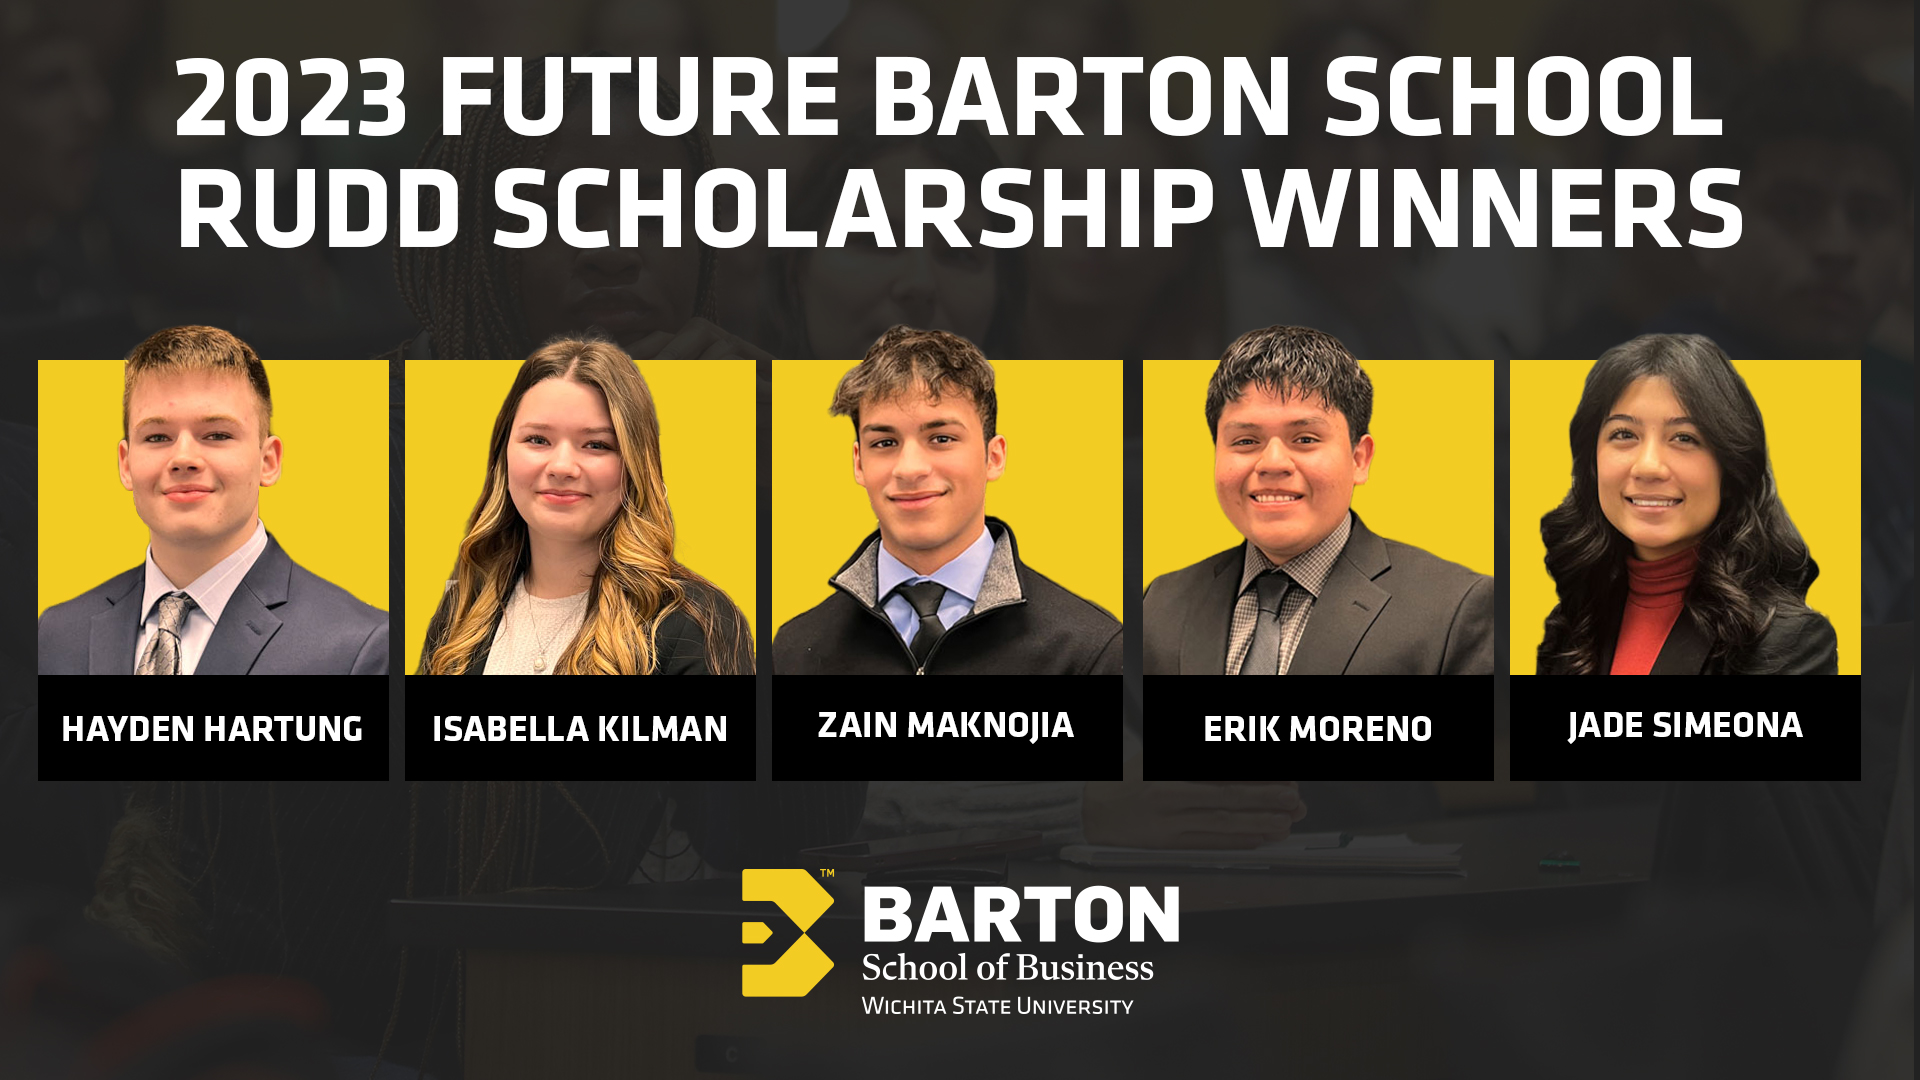 2023 Future Barton School Rudd Scholarship Winners: Hayden Hartung, Isabella Kilman, Zain Maknojia, Erik Moreno and Jade Simeona